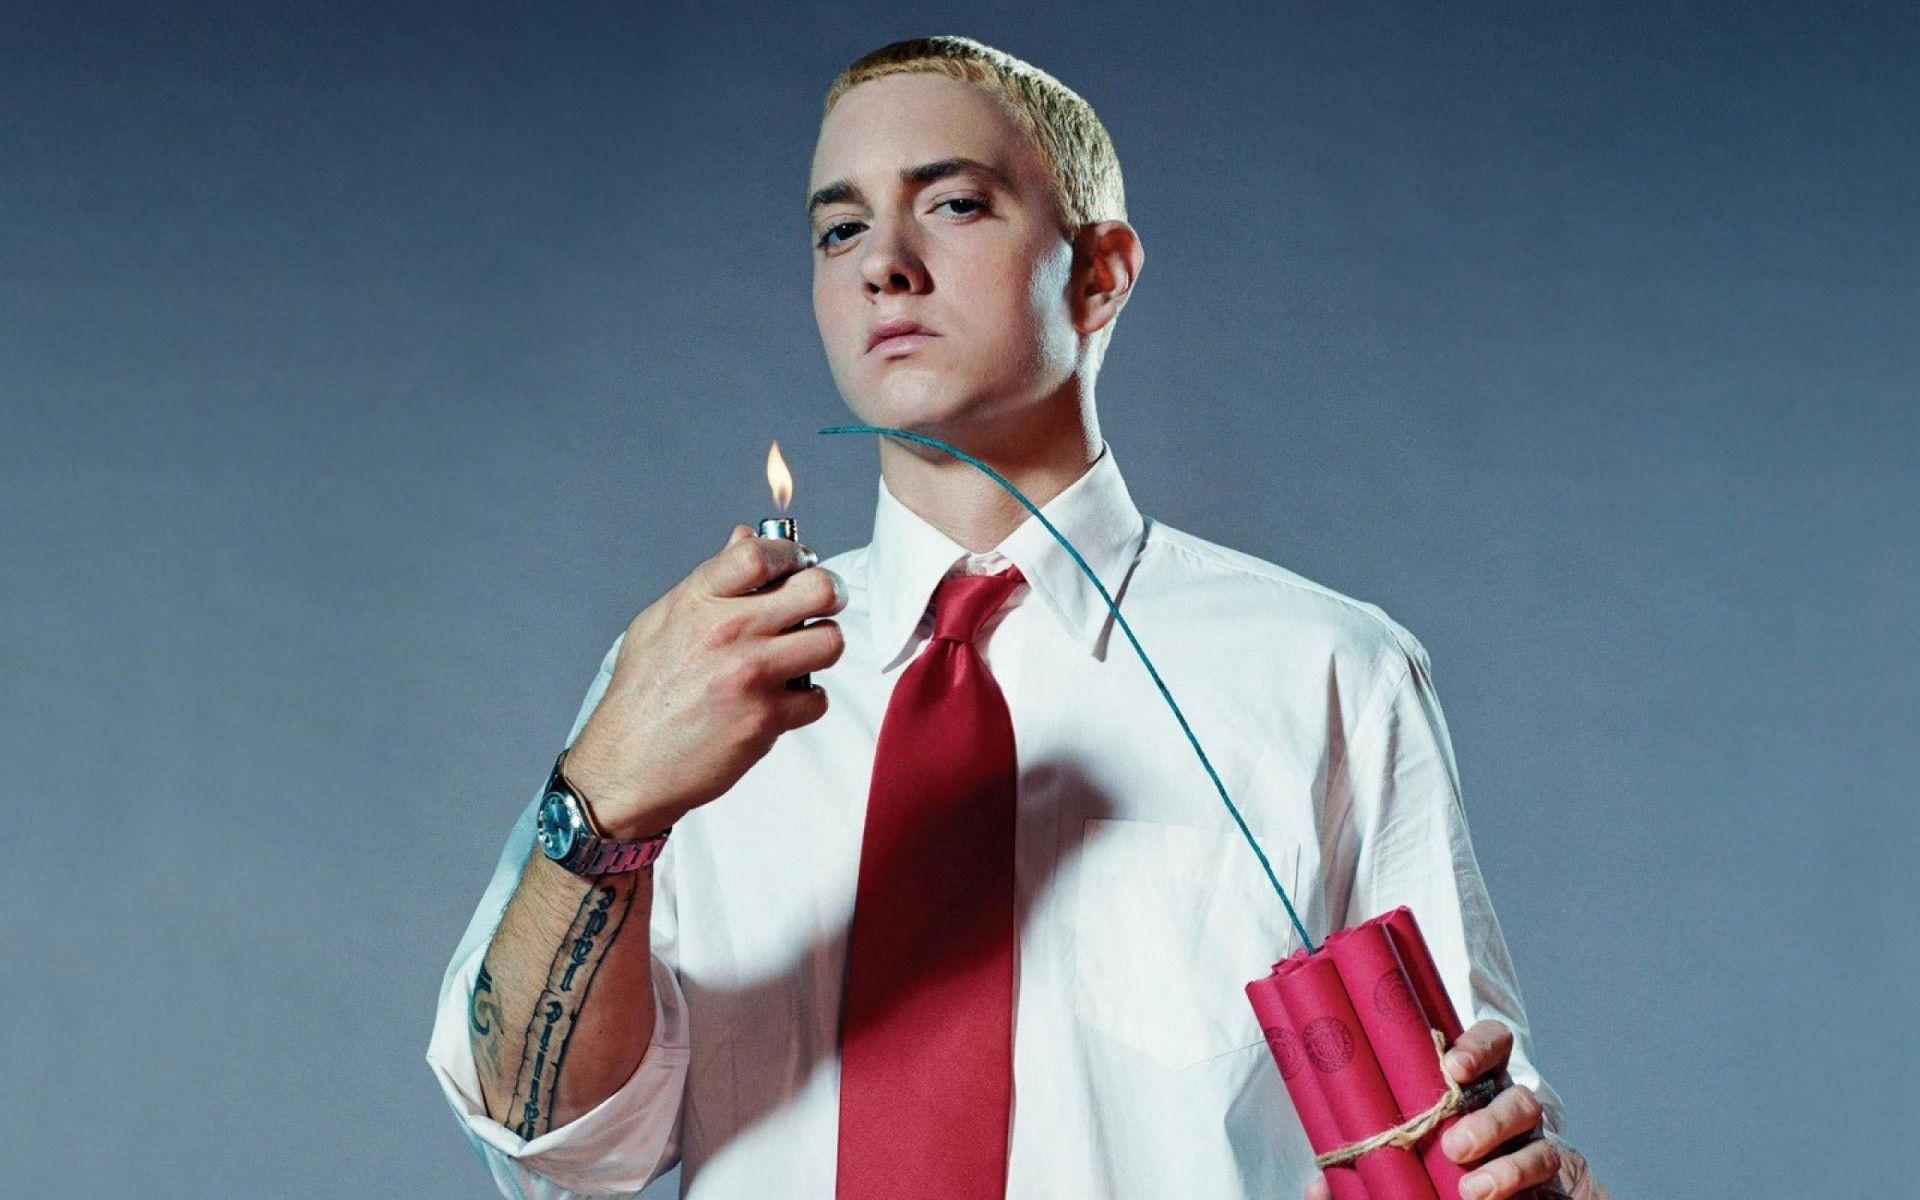 Slim Shady the Future of Eminem.